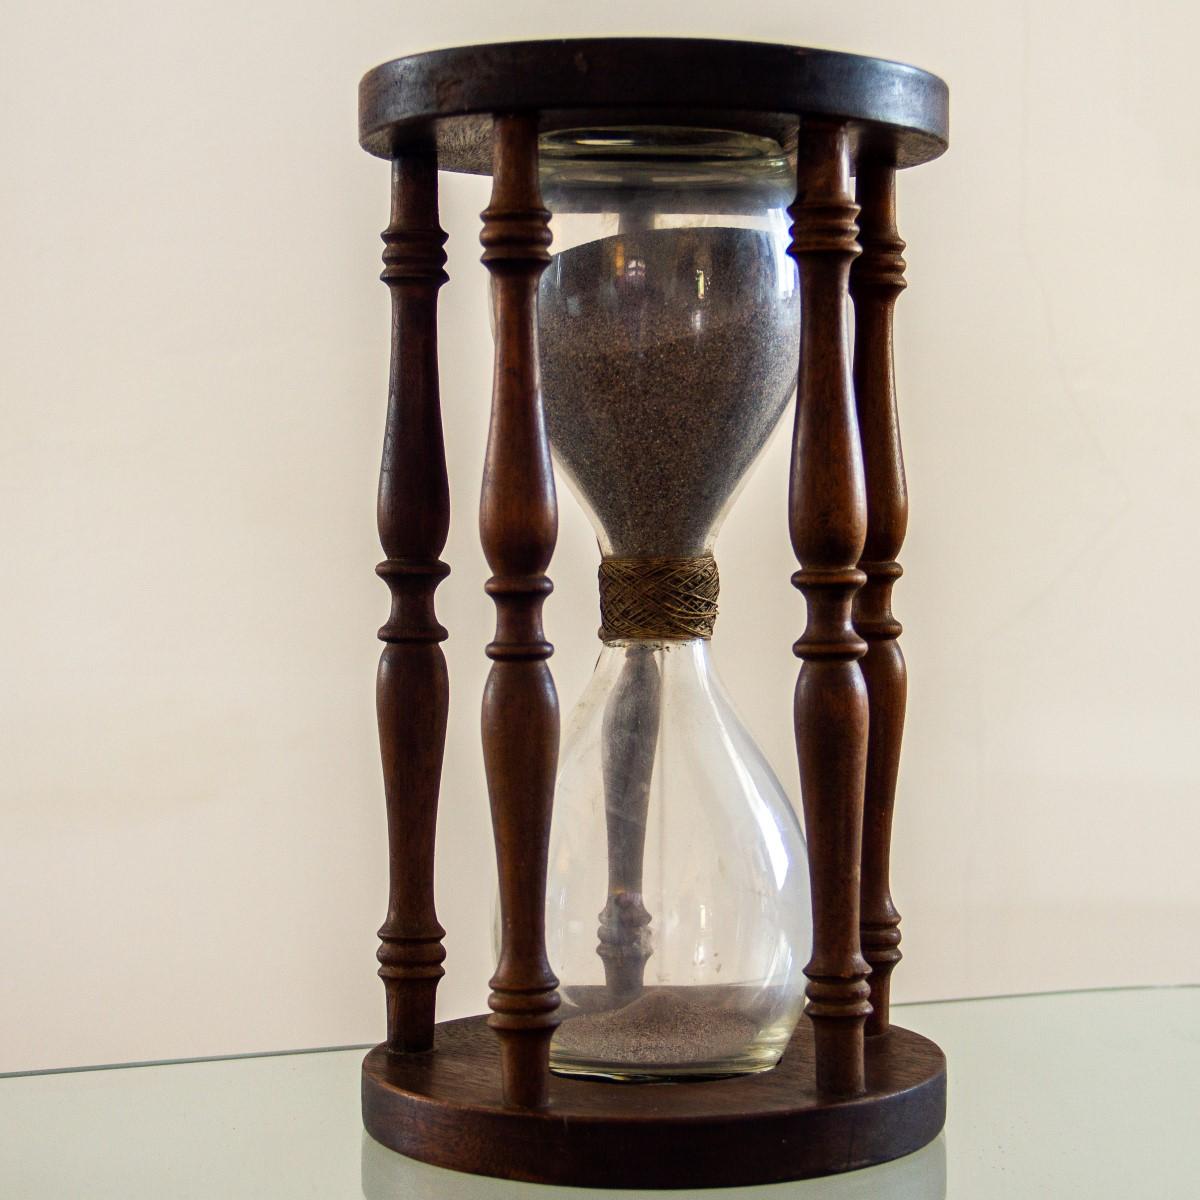 antique hourglass